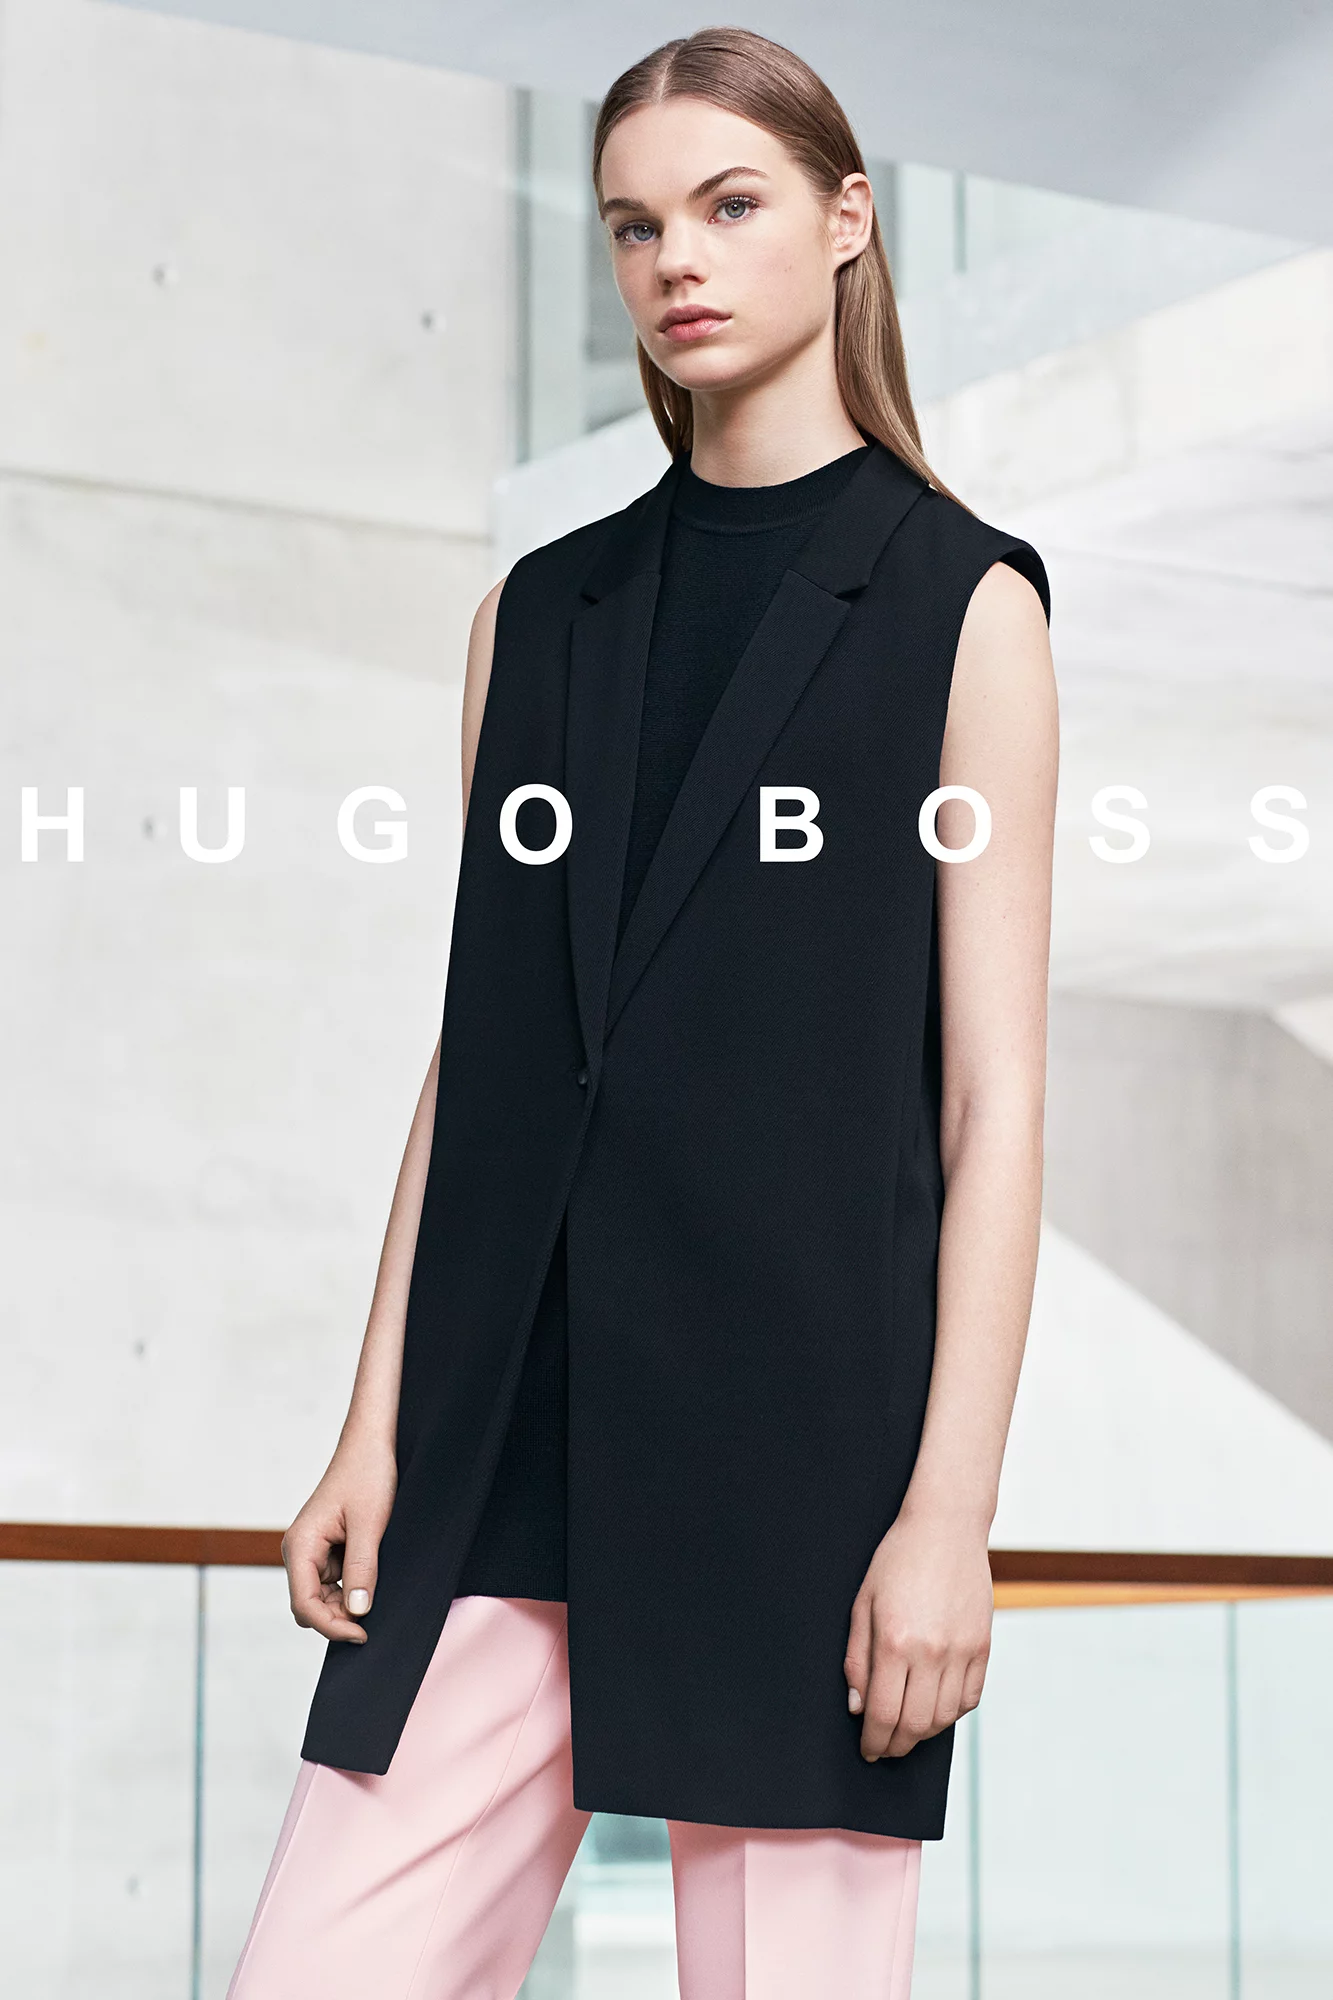 Hugo Boss 3 by Tobias LUNDKVIST